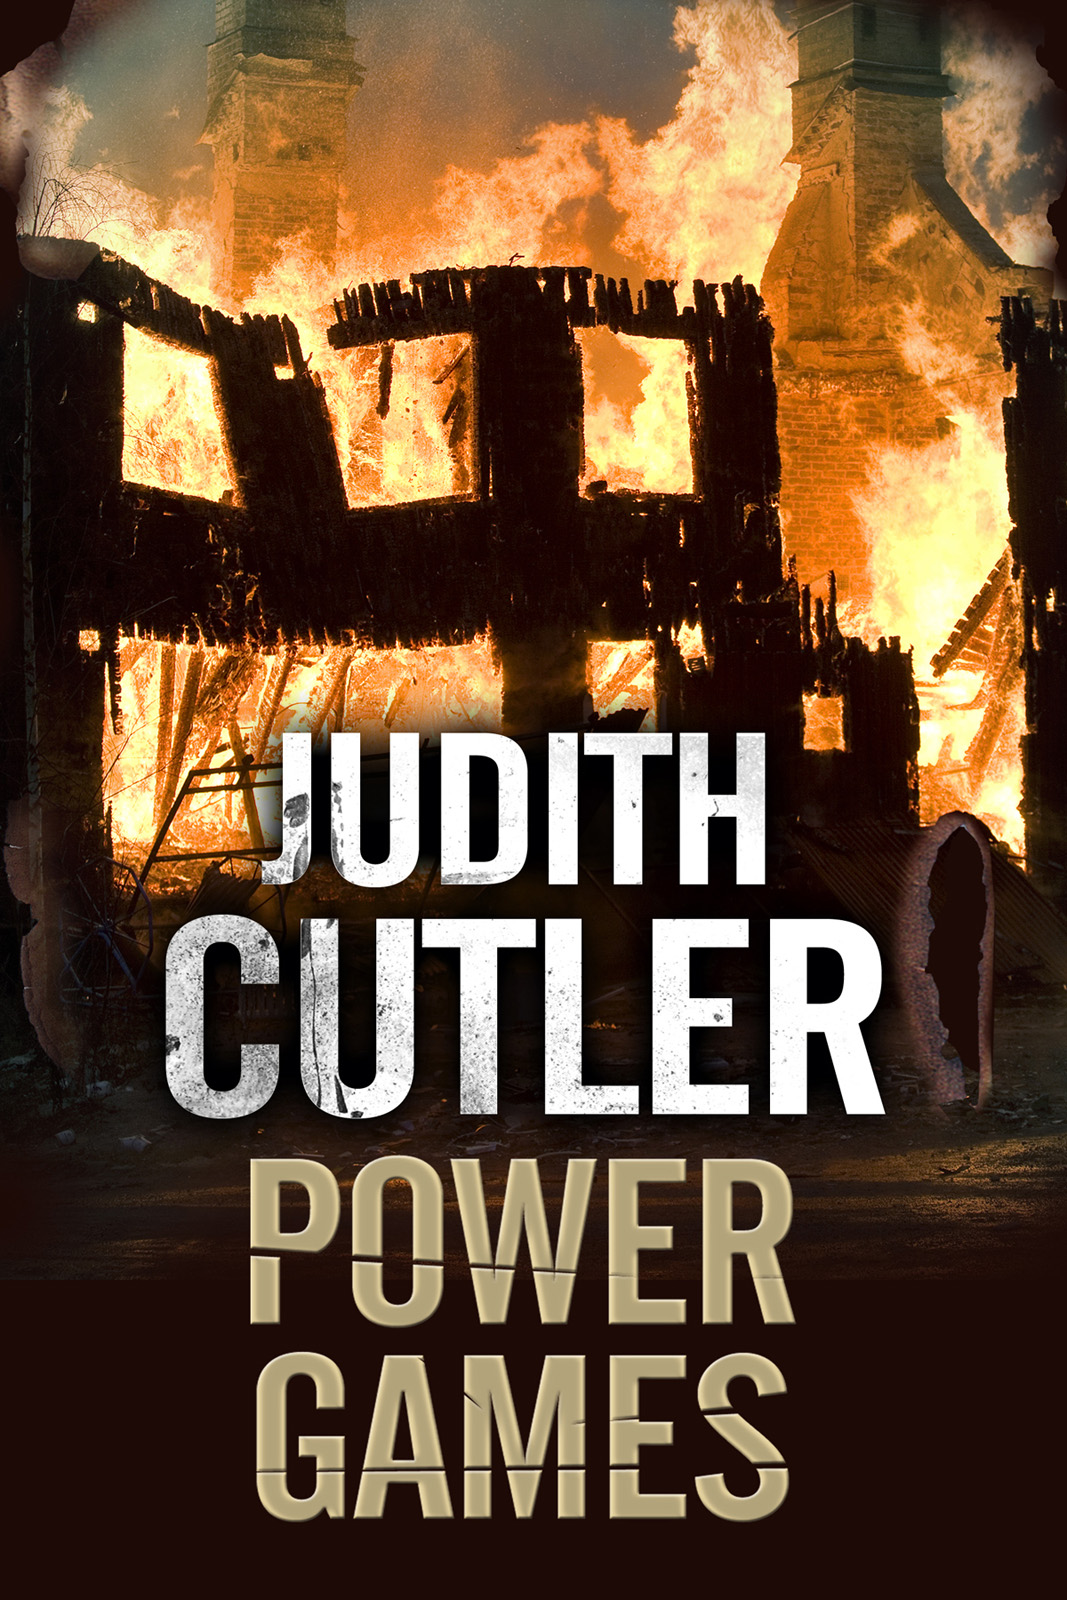 Power Games (2014) by Judith Cutler